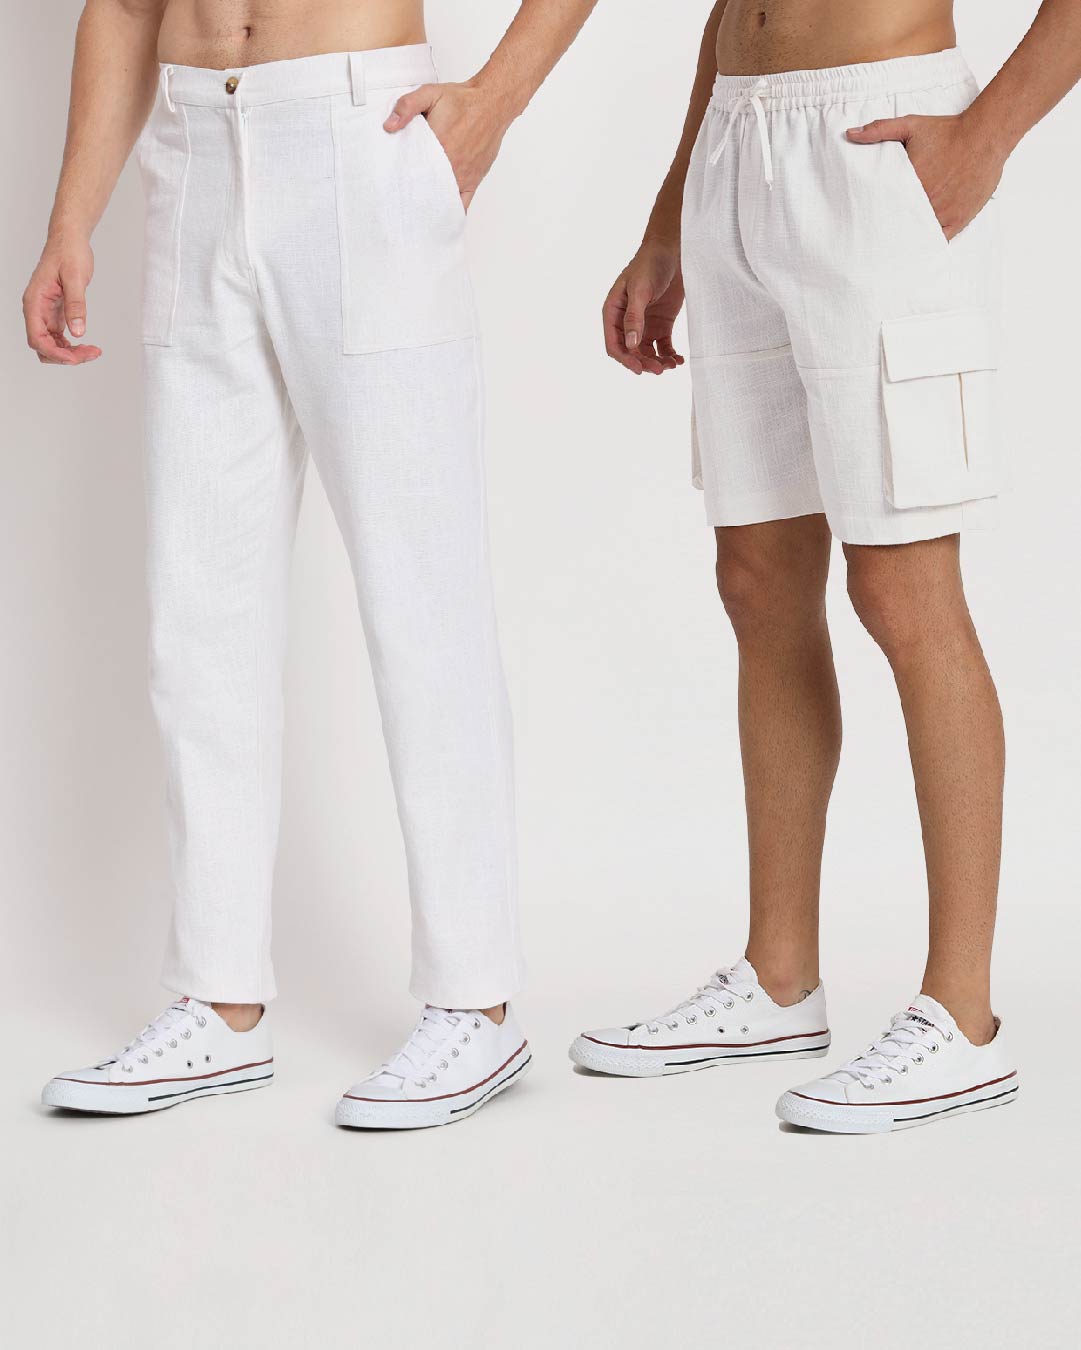 Combo : Comfy Ease & Cargo White Men's Pants & Shorts  - Set of 2